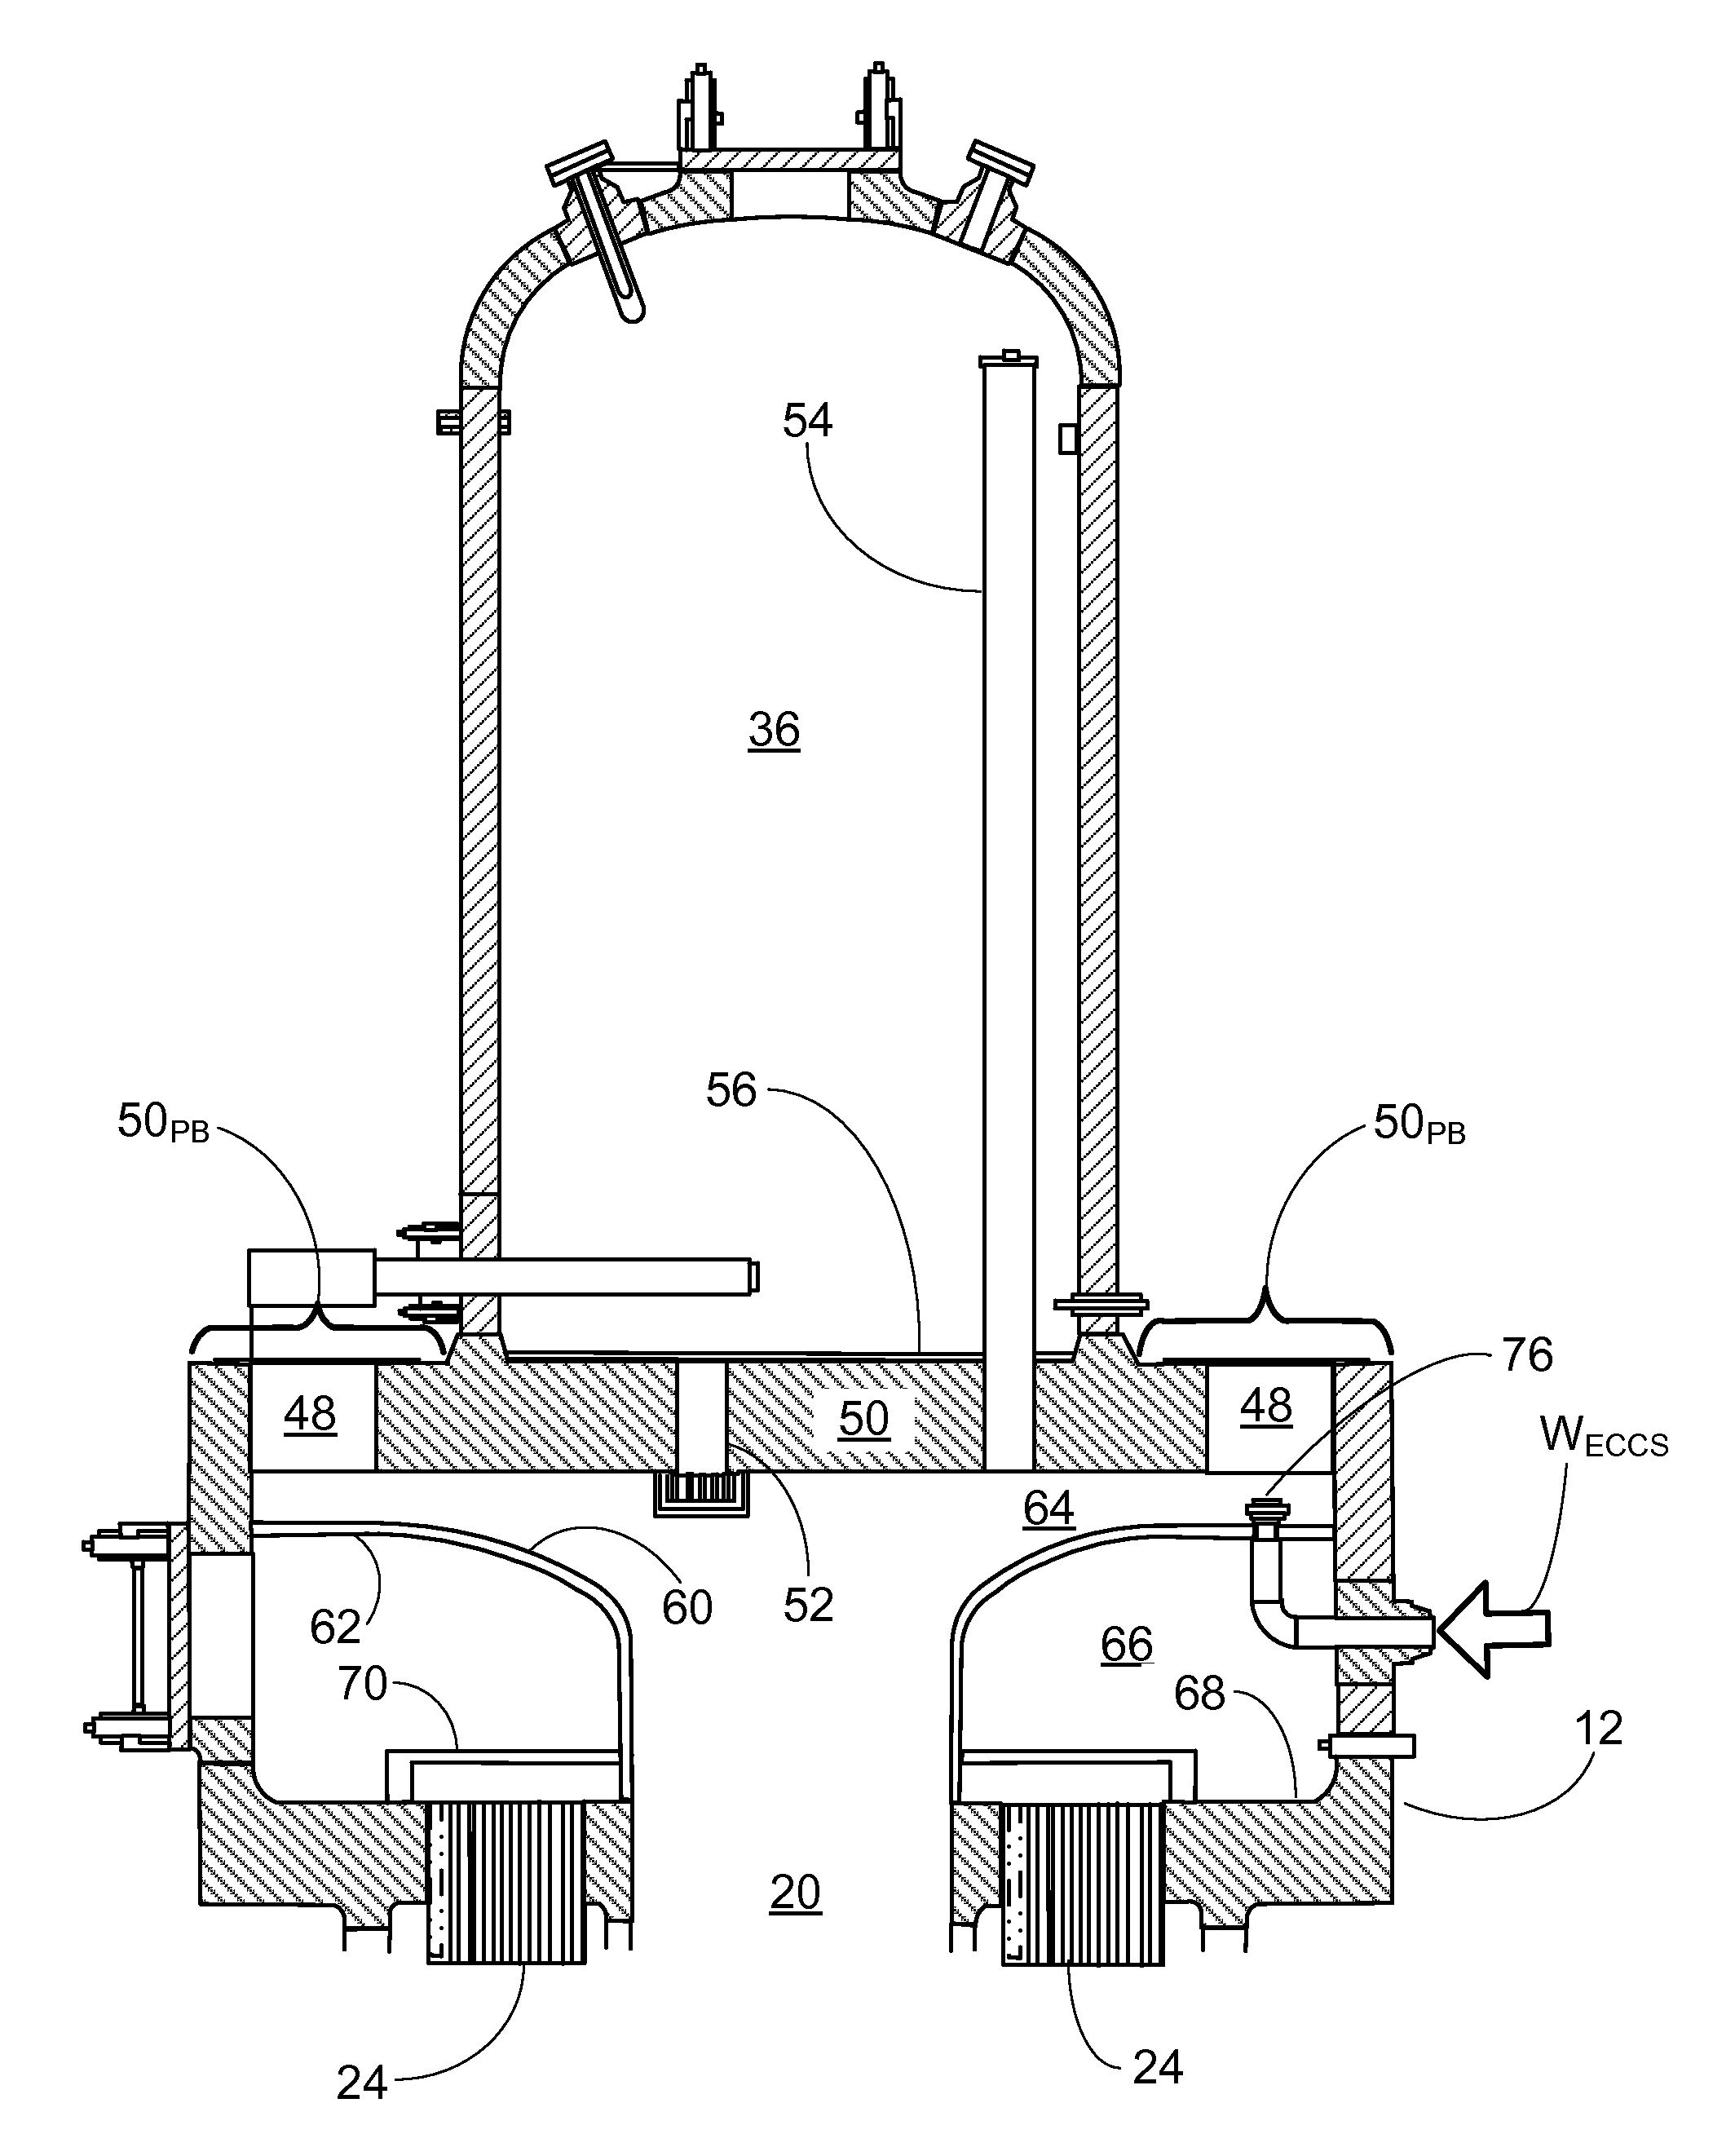 Pressurized water reactor with upper plenum including cross-flow blocking weir